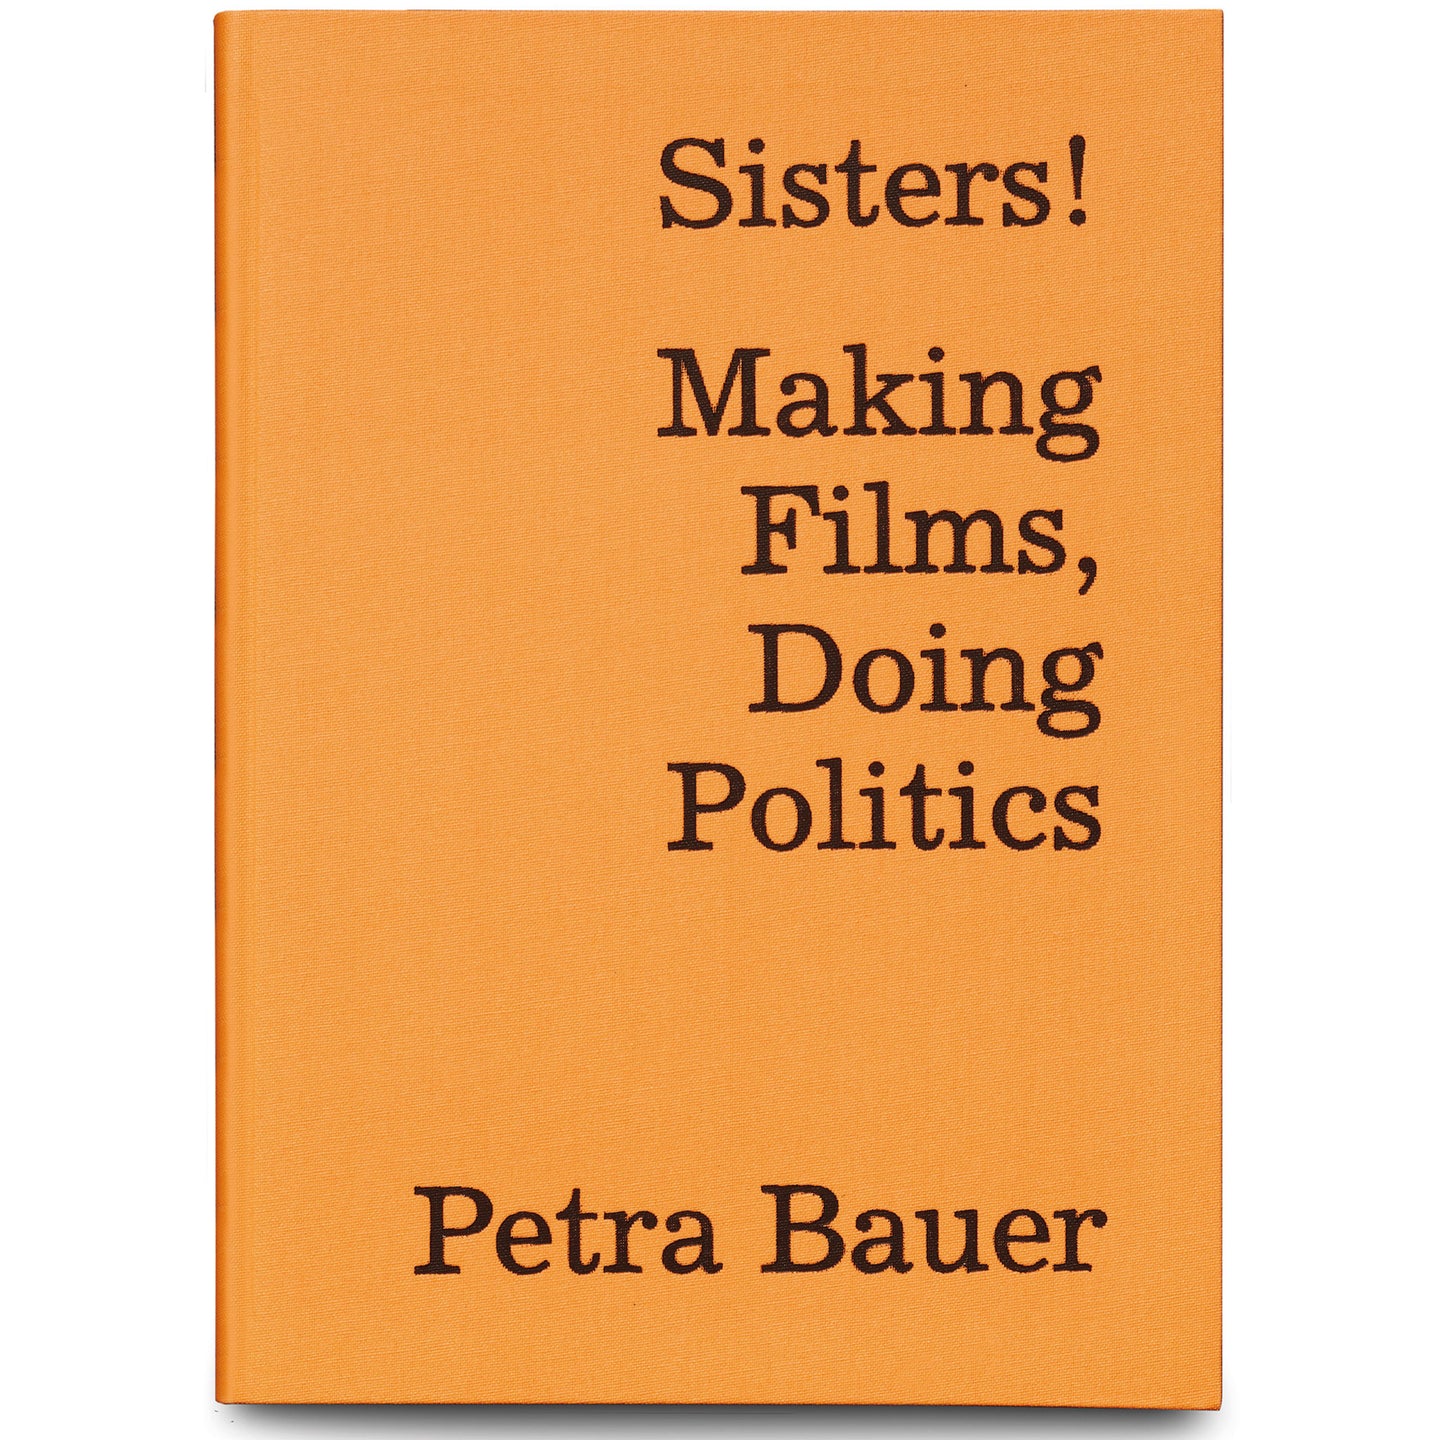 PETRA BAUER: SISTERS! MAKING FILMS, DOING POLITICS